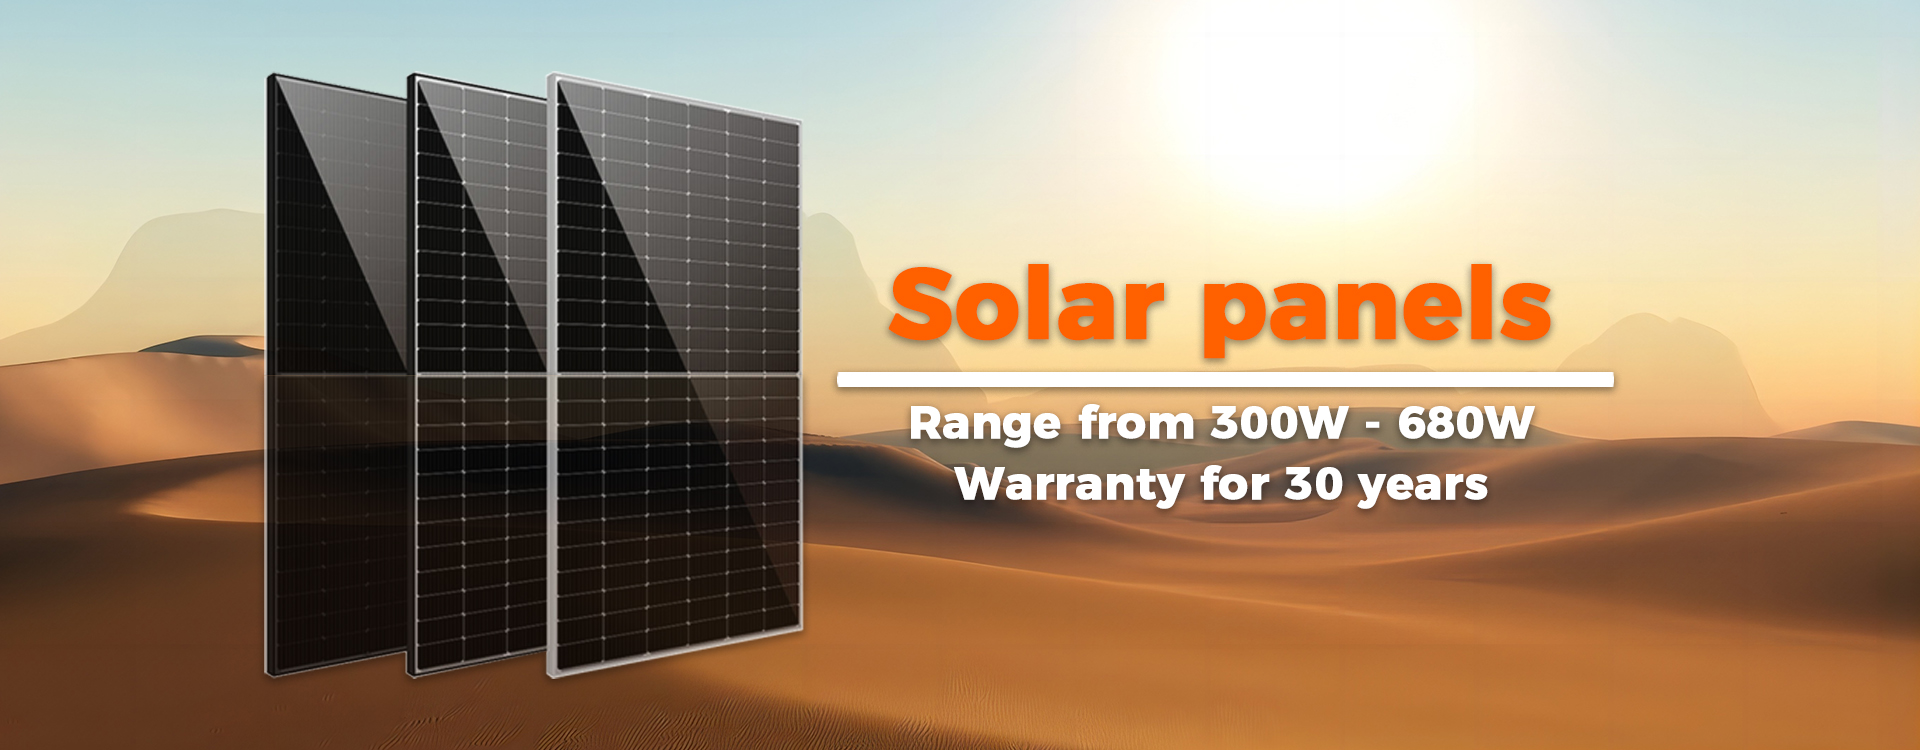 PV Solar Paels